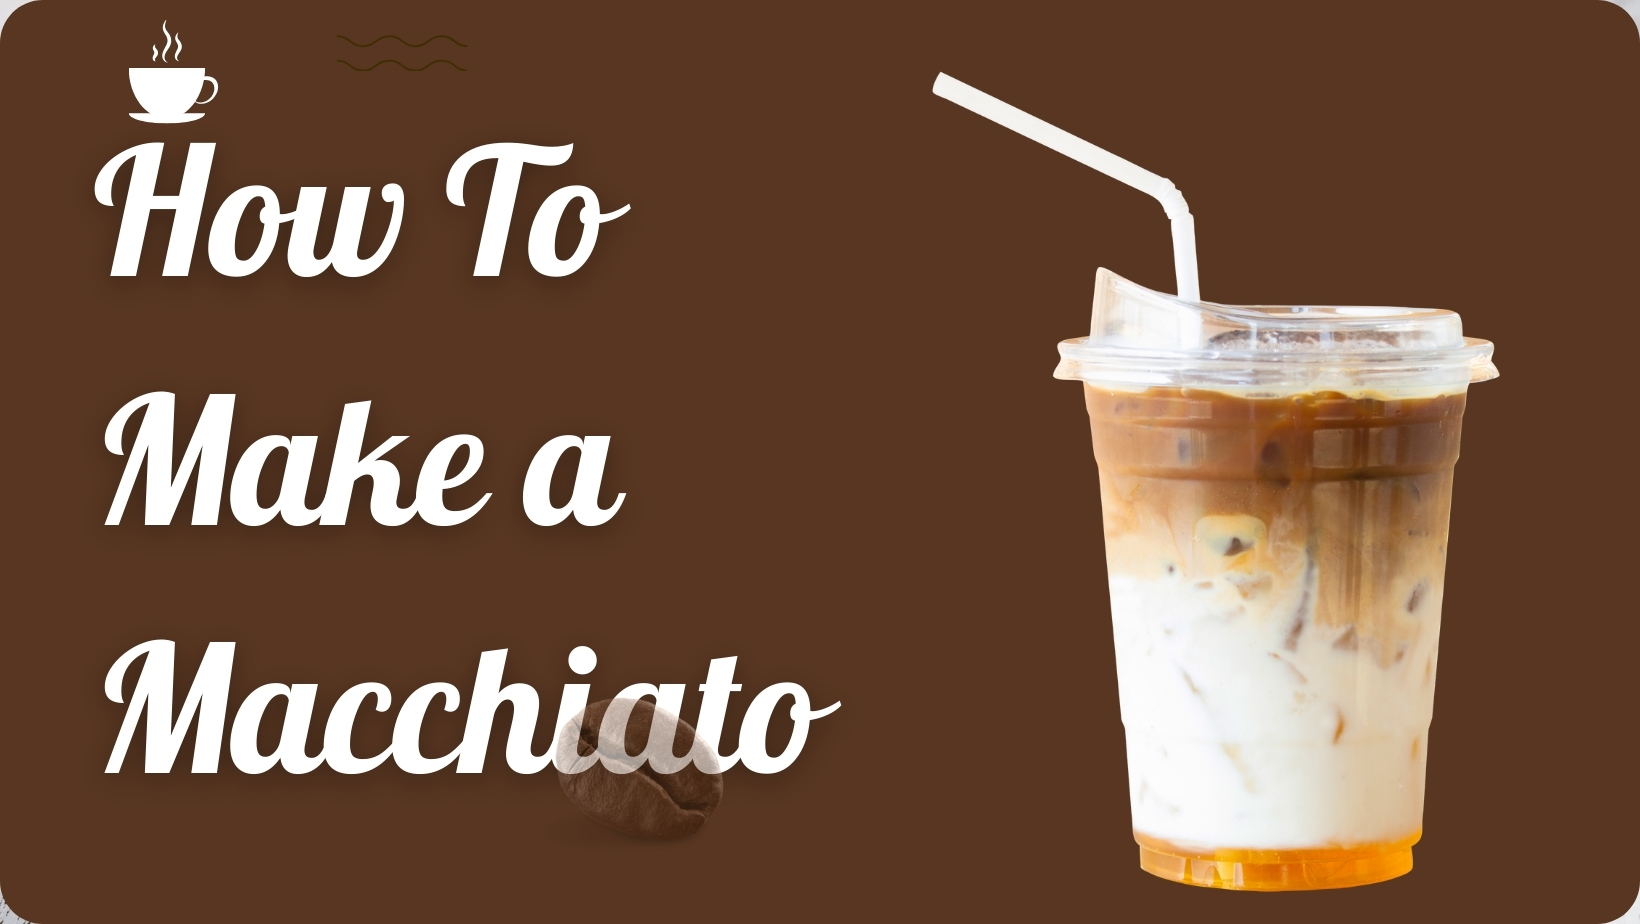 How To Make a Macchiato?